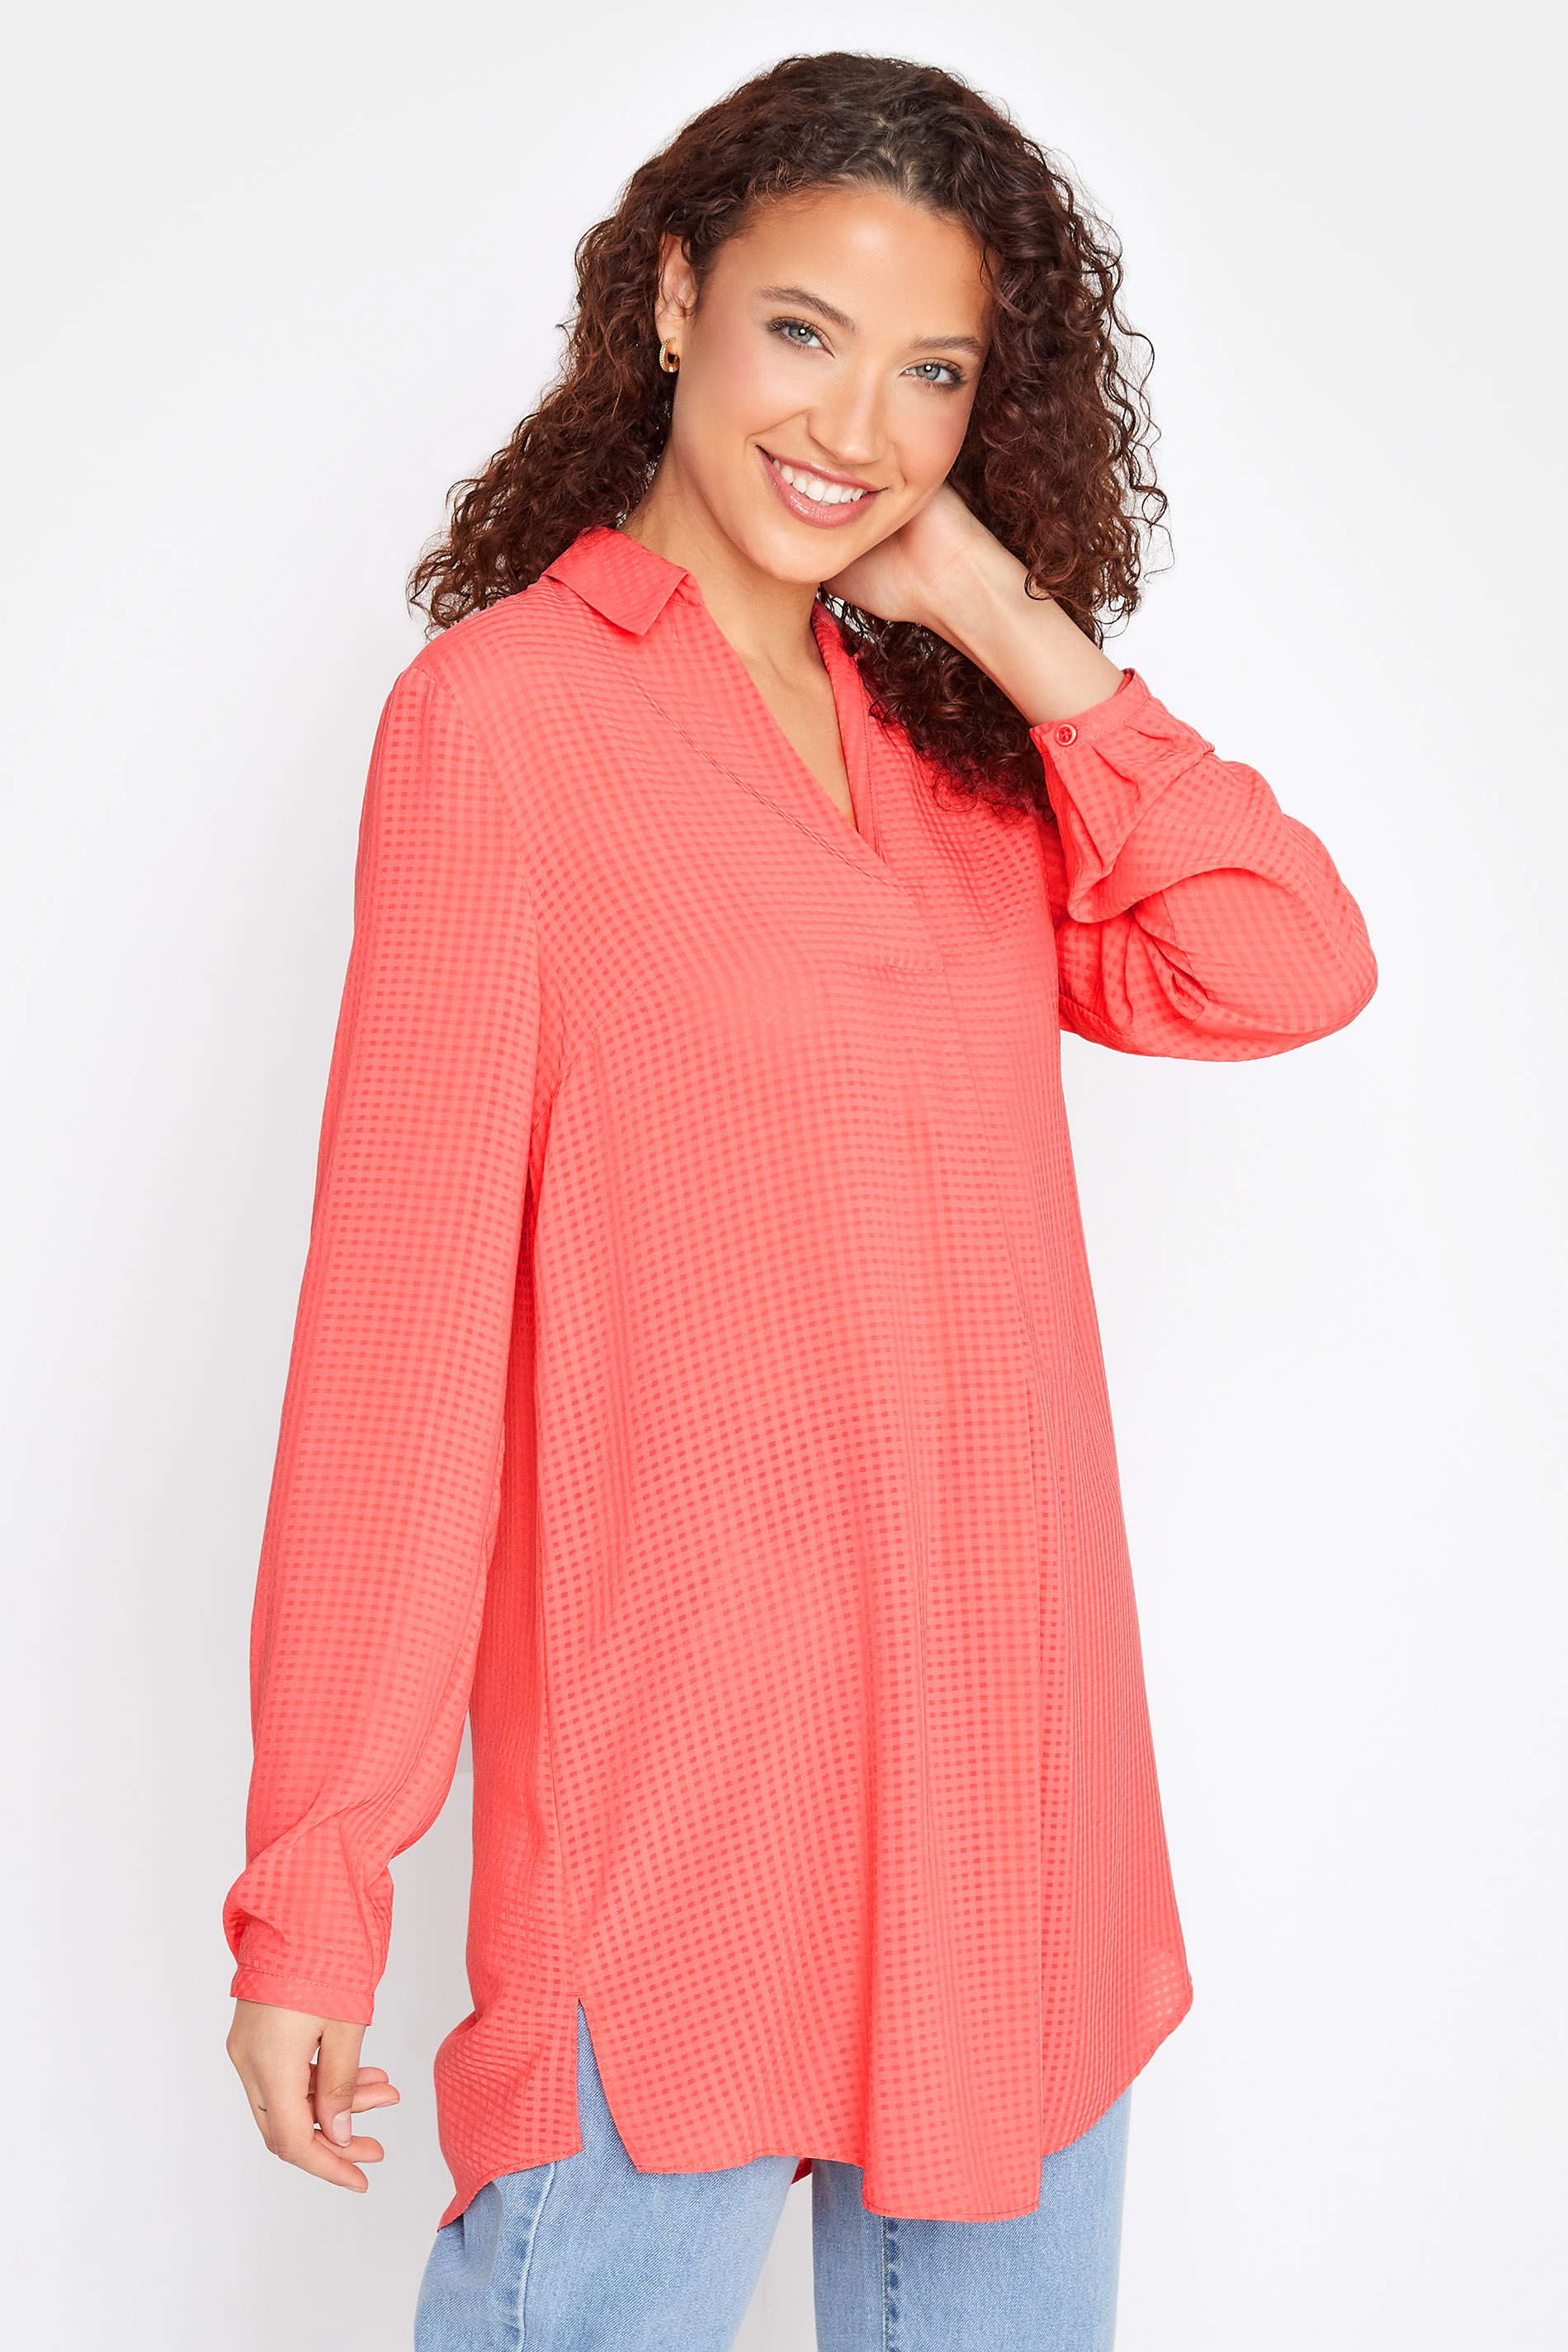 LTS Tall Women's Coral Orange Gingham Overhead Shirt | Long Tall Sally  1